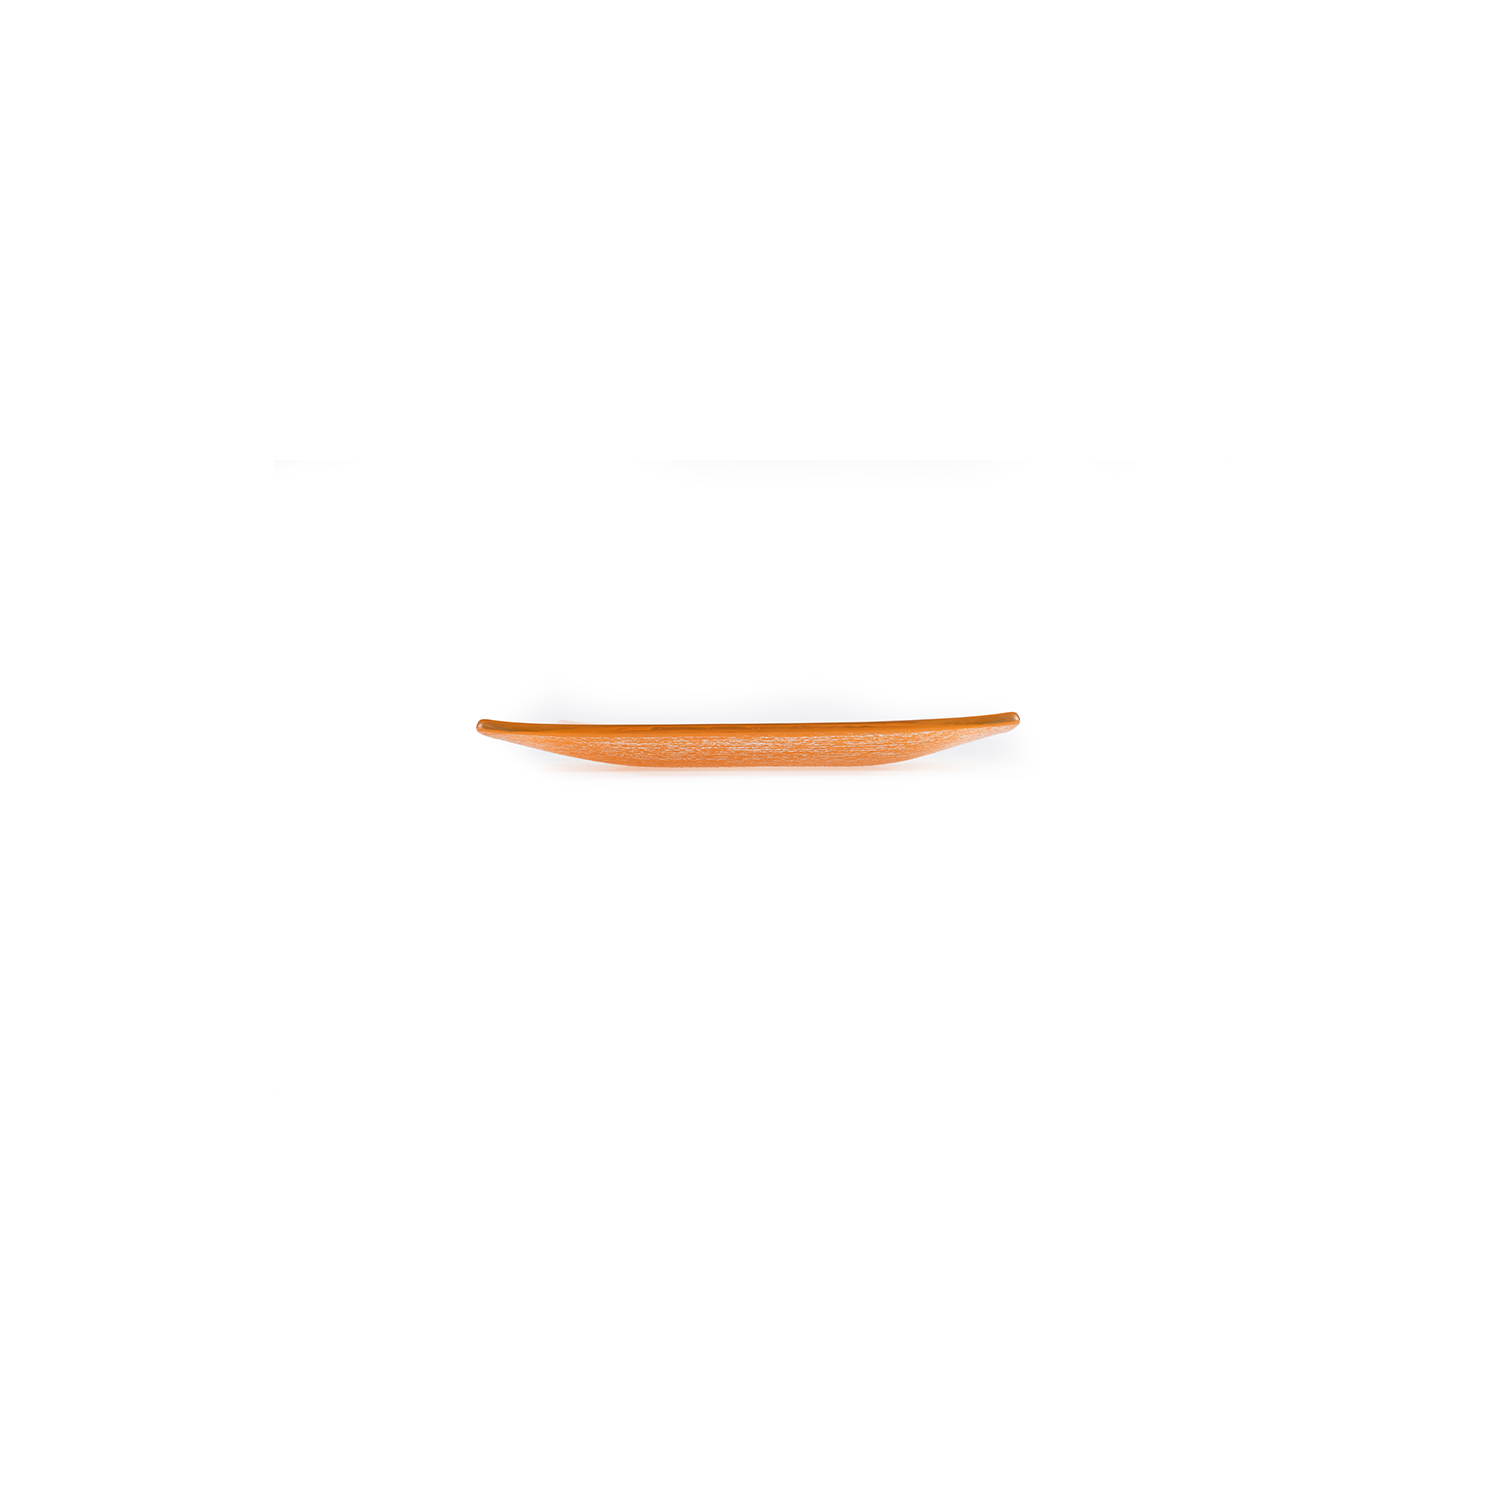 Fusion Glass Plate Orange Square 7.75″ x 7.75″ x 0.5″  CasePack:12